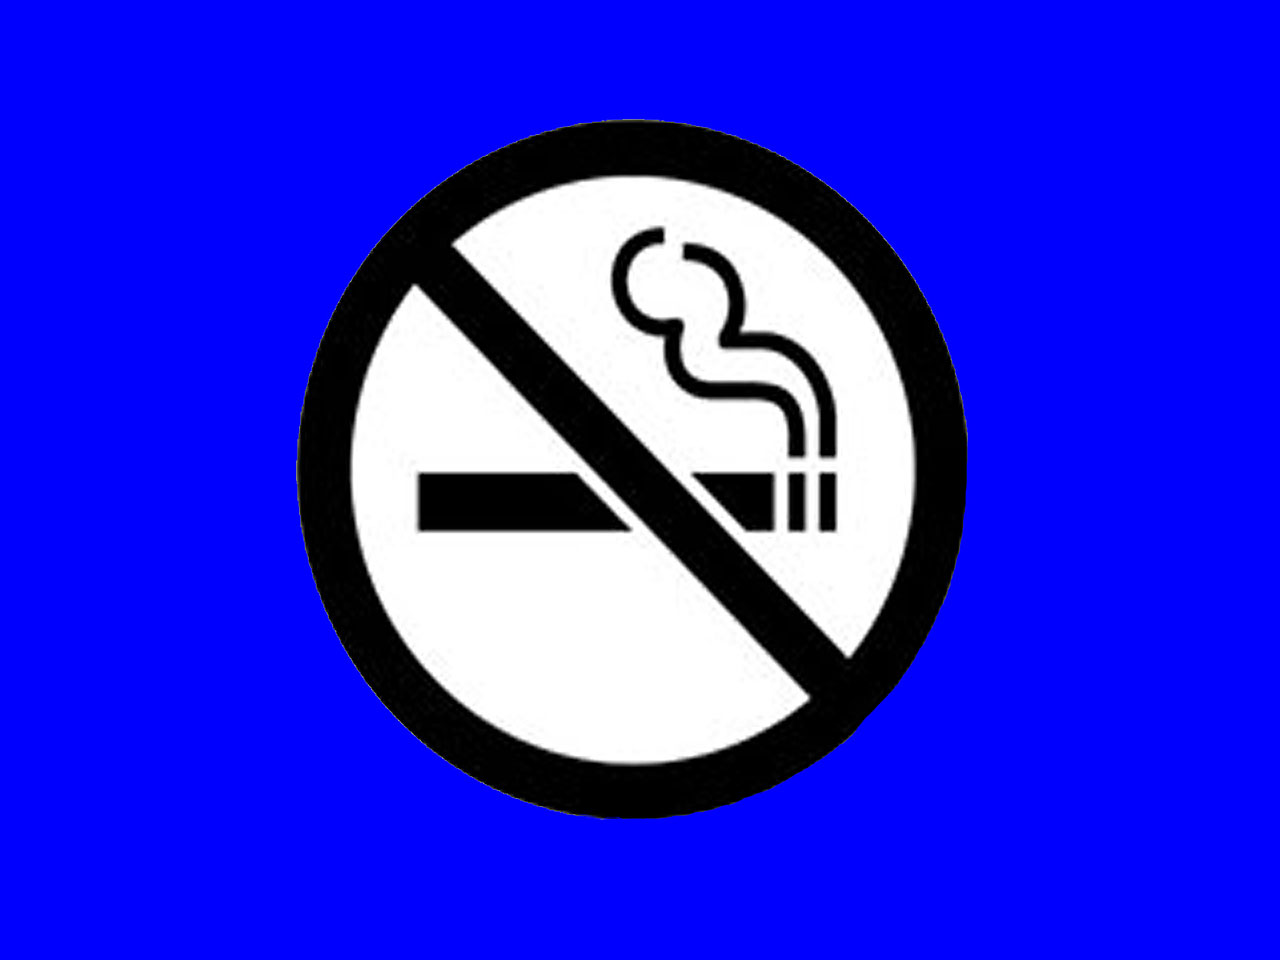 Public no smoking sign